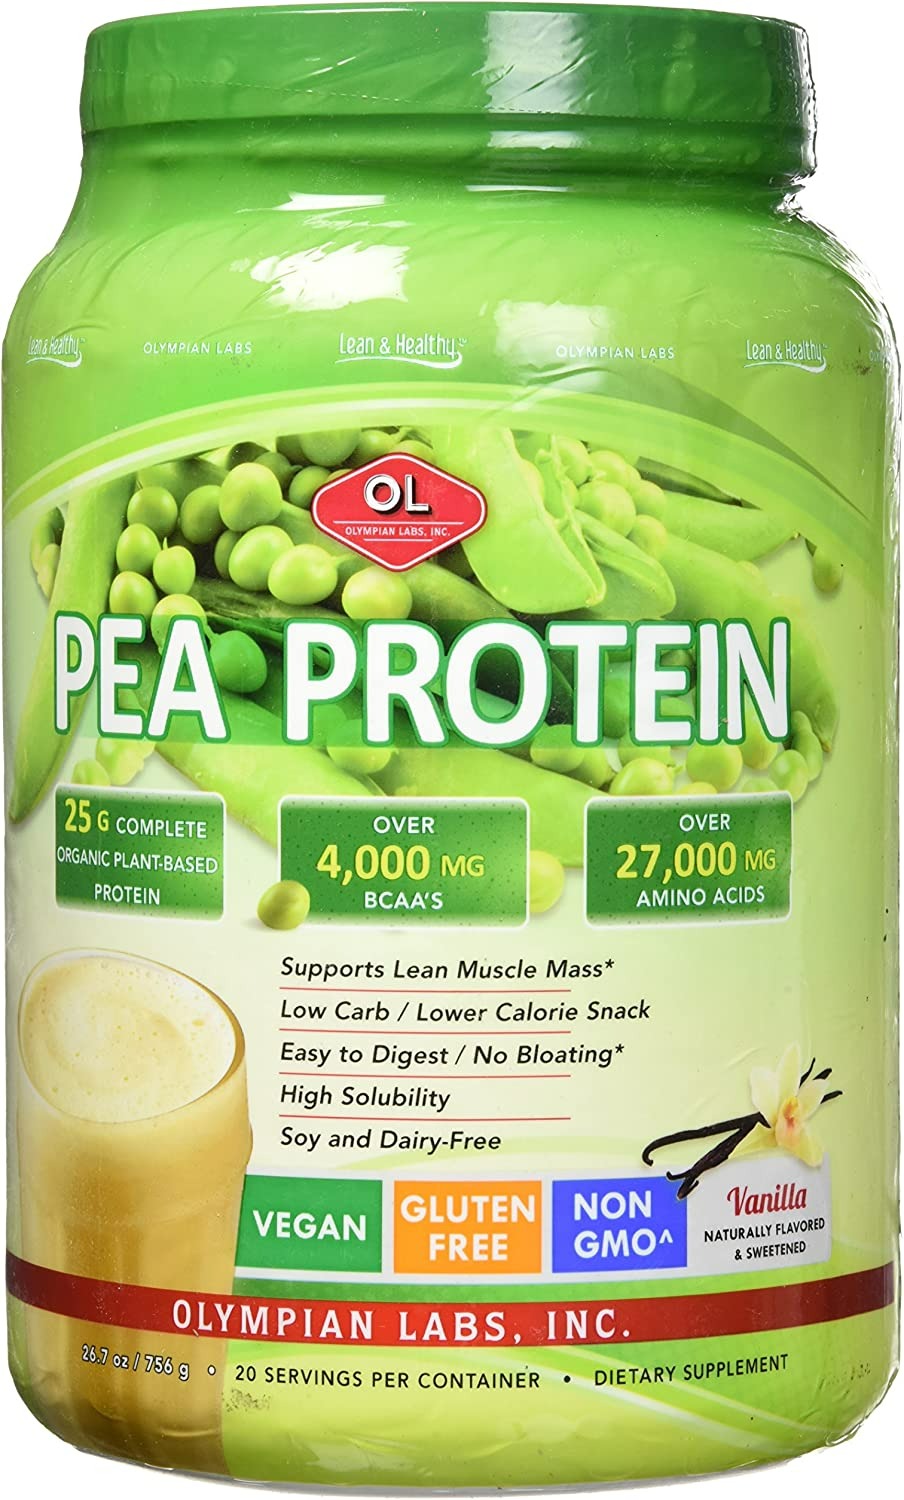 Olympian Labs Plant Based Pea Protein Powder - Vanilla - 26.7 Oz